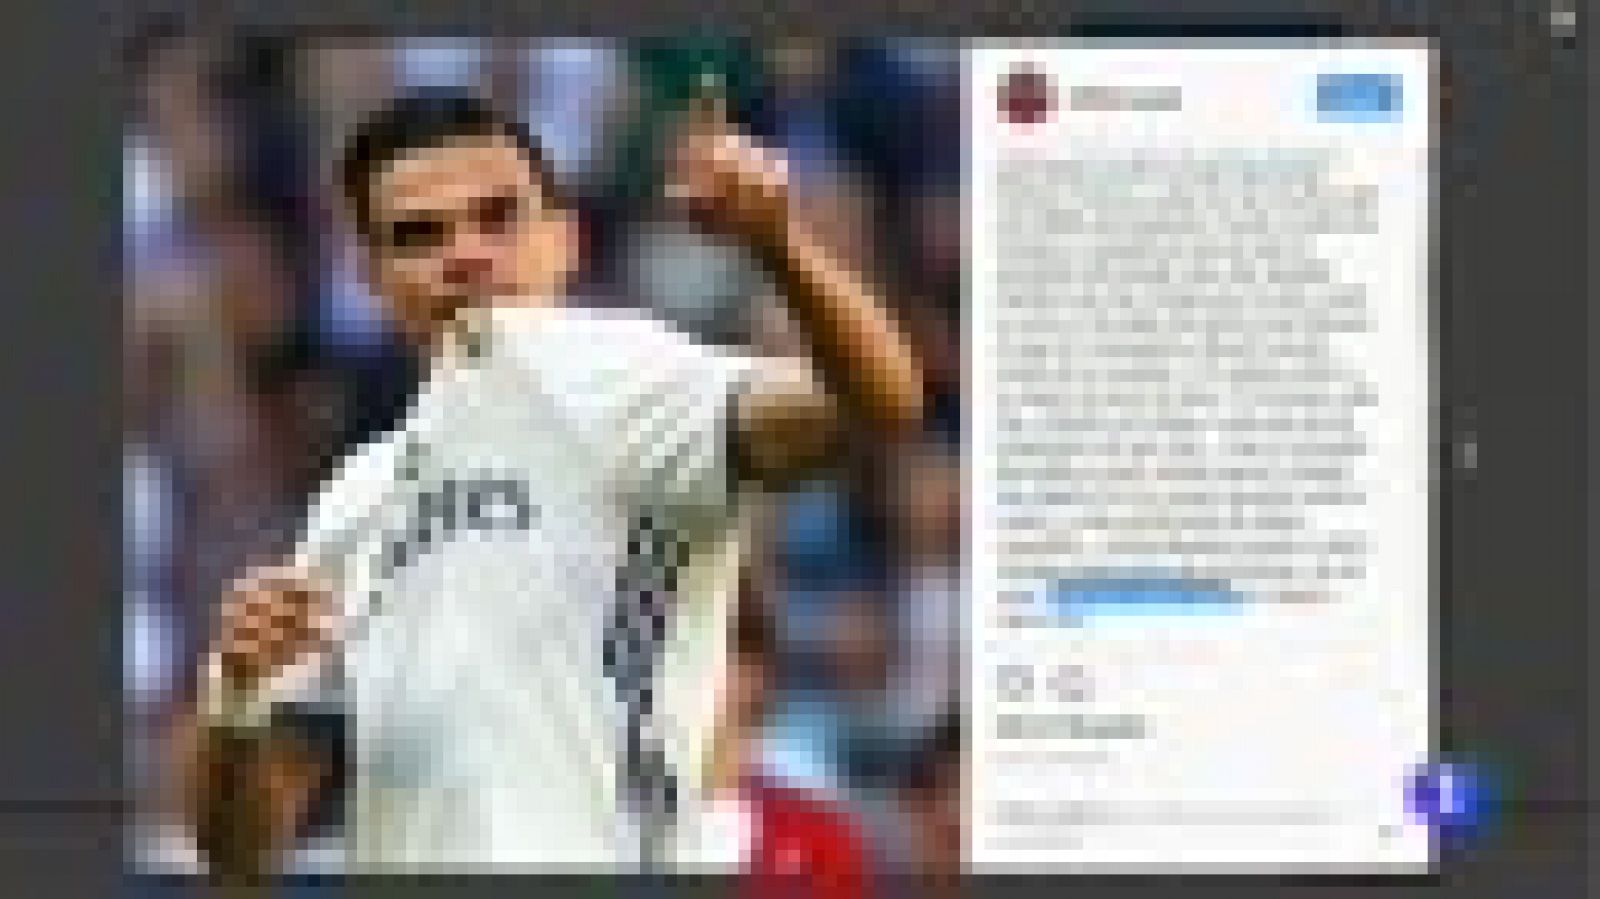 Pepe se despide del Madrid con una emotiva carta